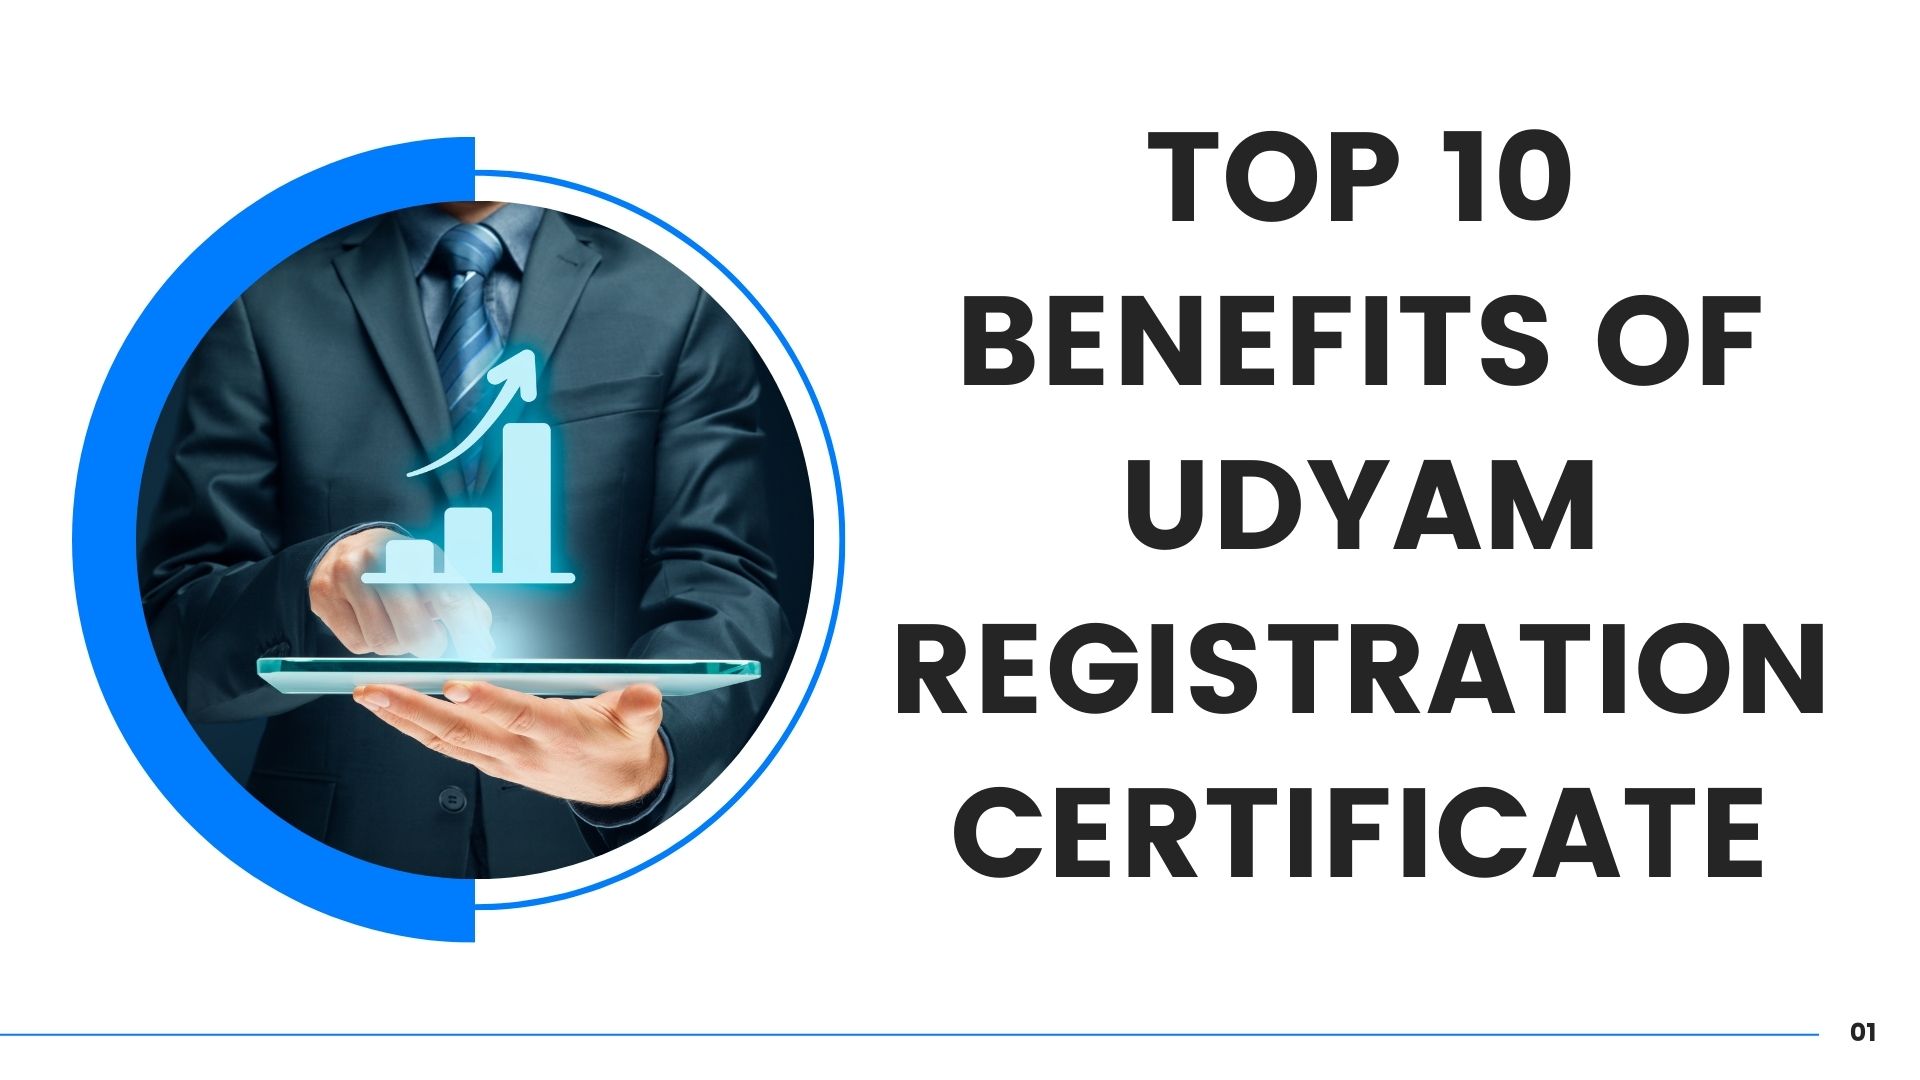 Top 10 Benefits of UDYAM Registration Certificate